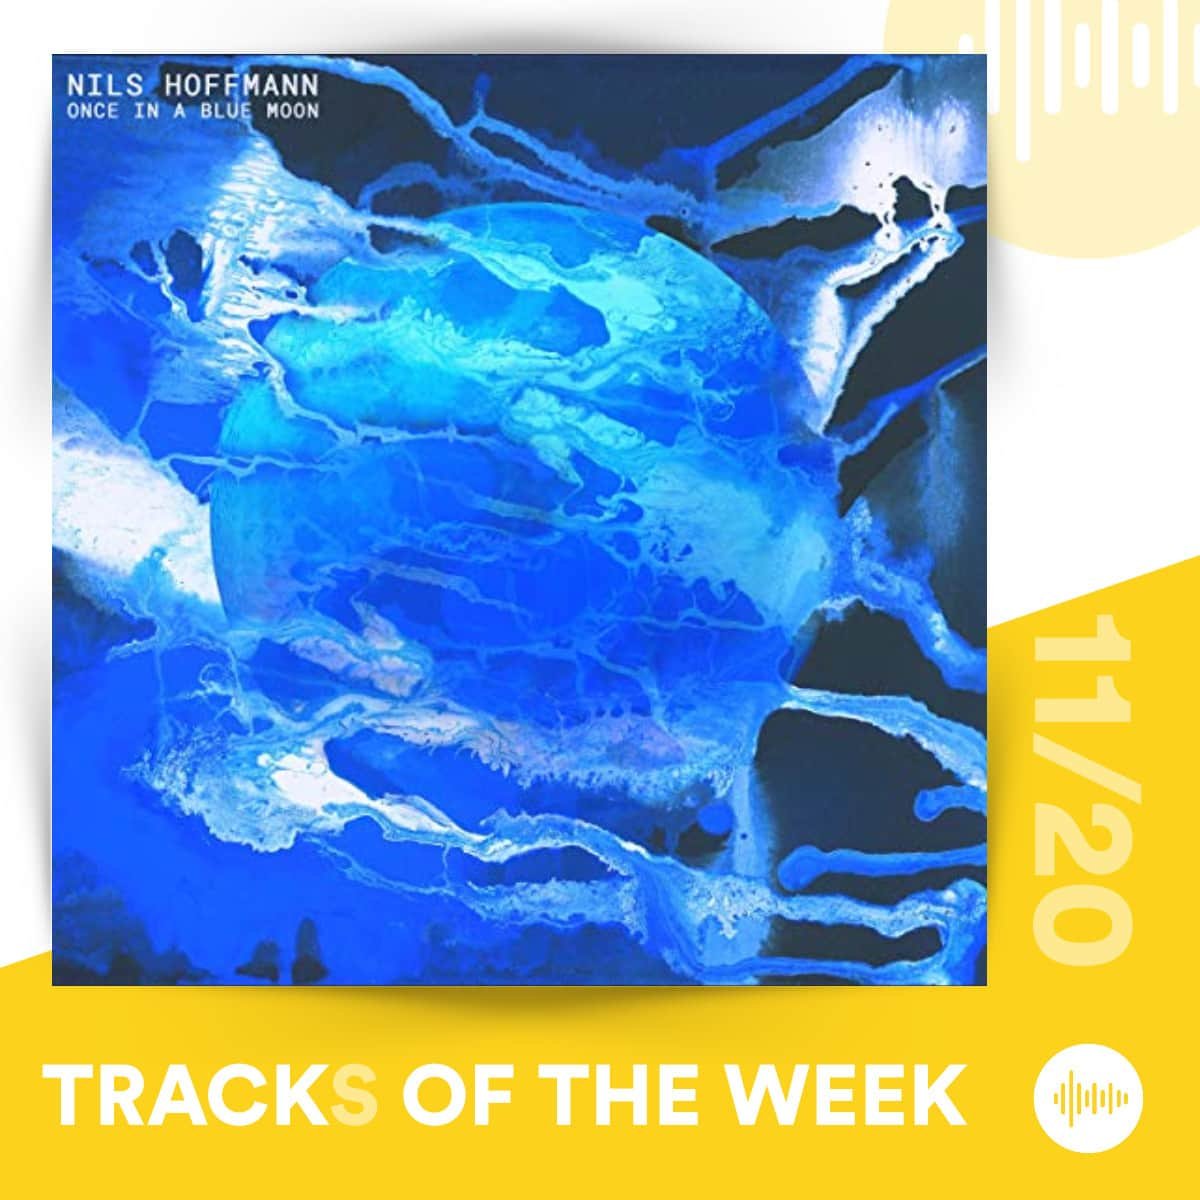 Tracks of the Week 11/20: Nils Hoffmann - 1.16699016 x 10^-8 hertz & Once in a Blue Moon